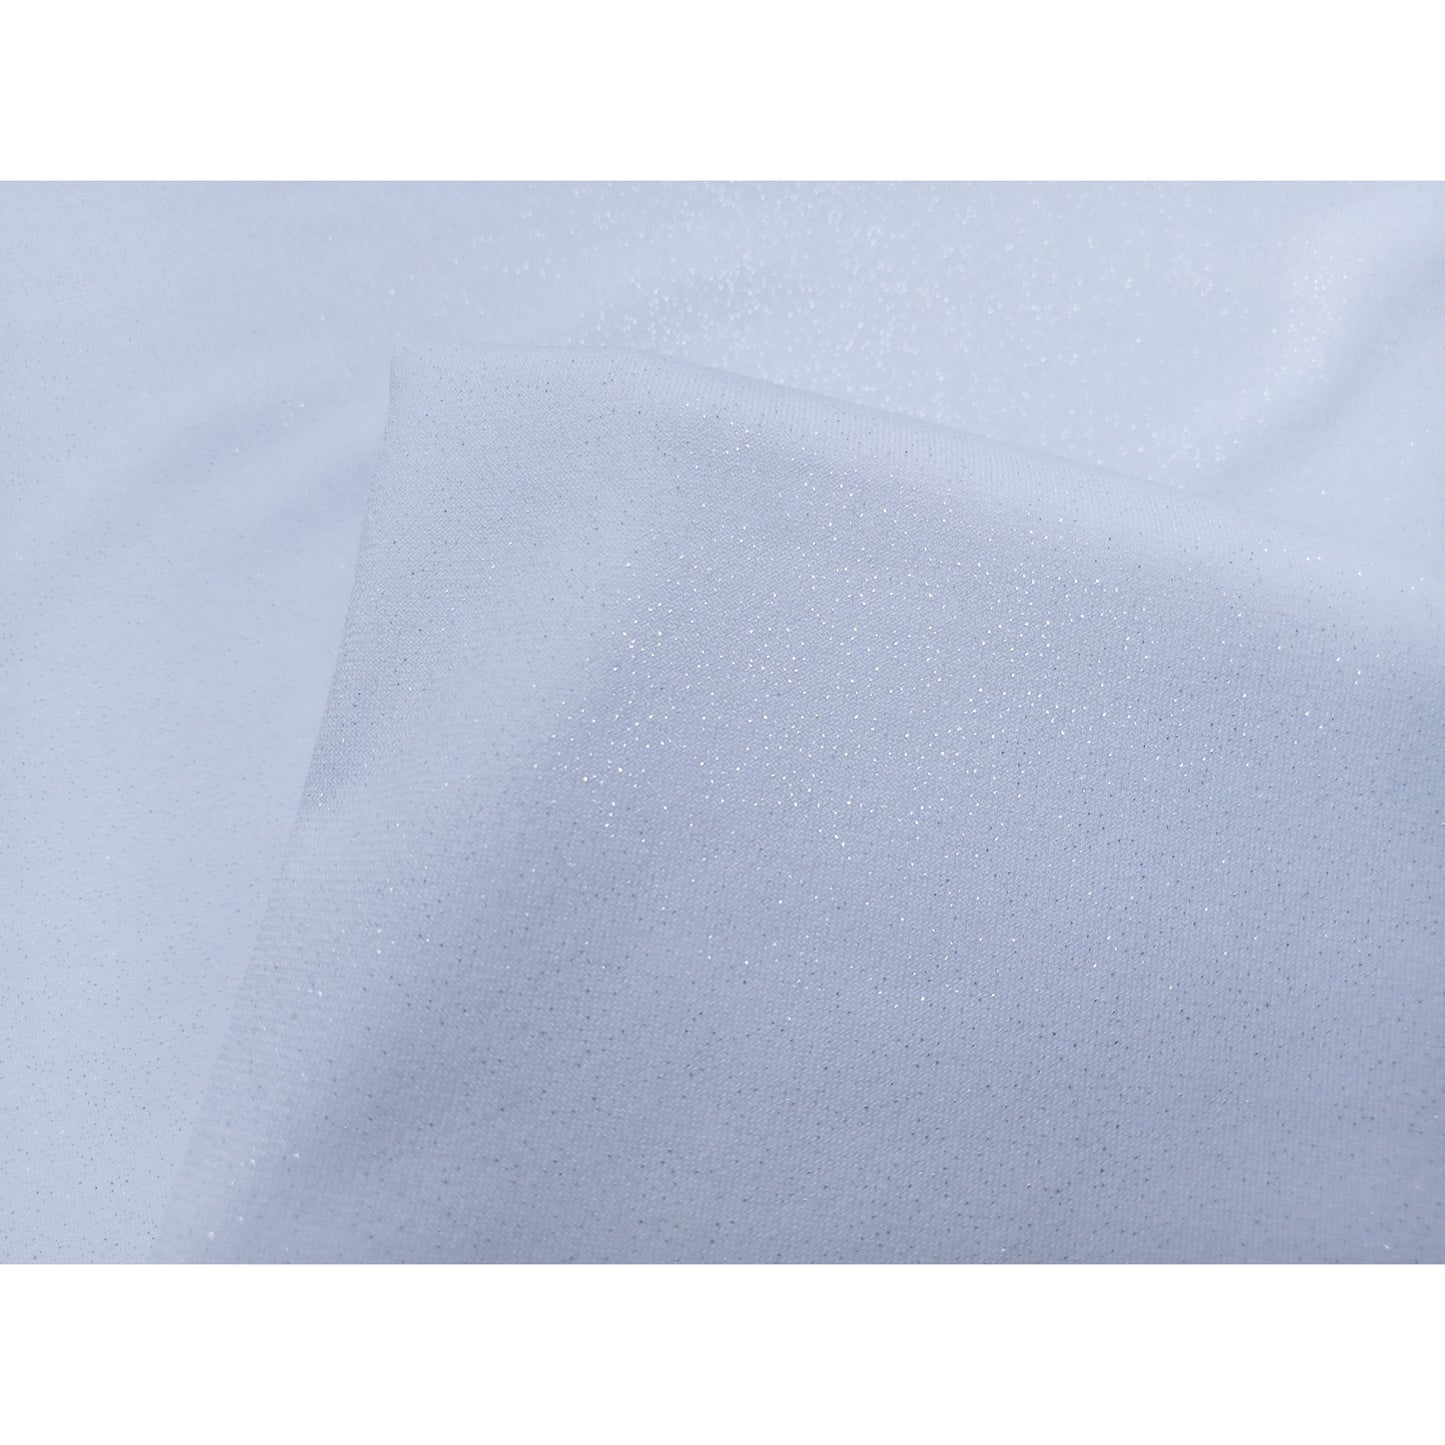 Capri-white silver foil jersey - sold by 1/2mtr